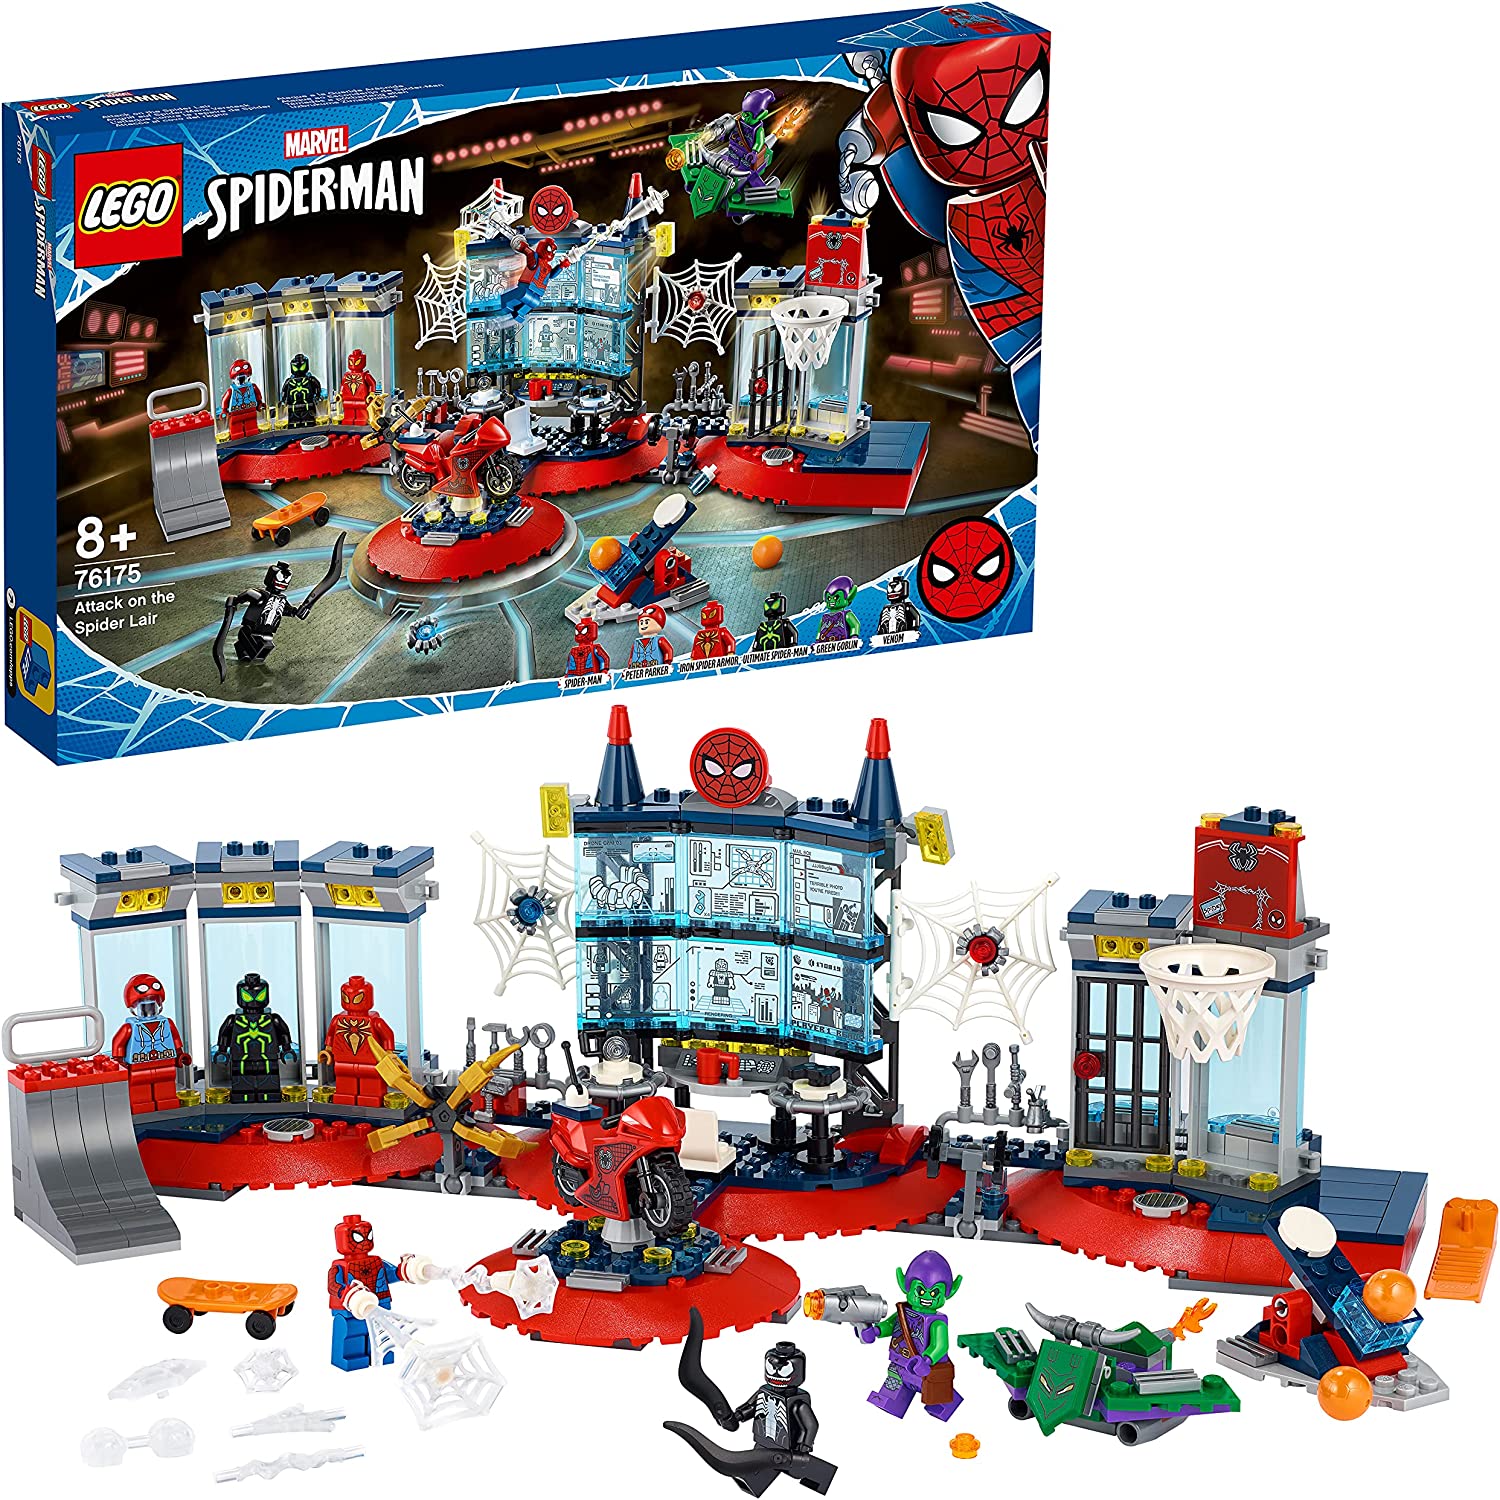 Lego 76175 Marvel Spider-Man Attack on the Spider Lair Set